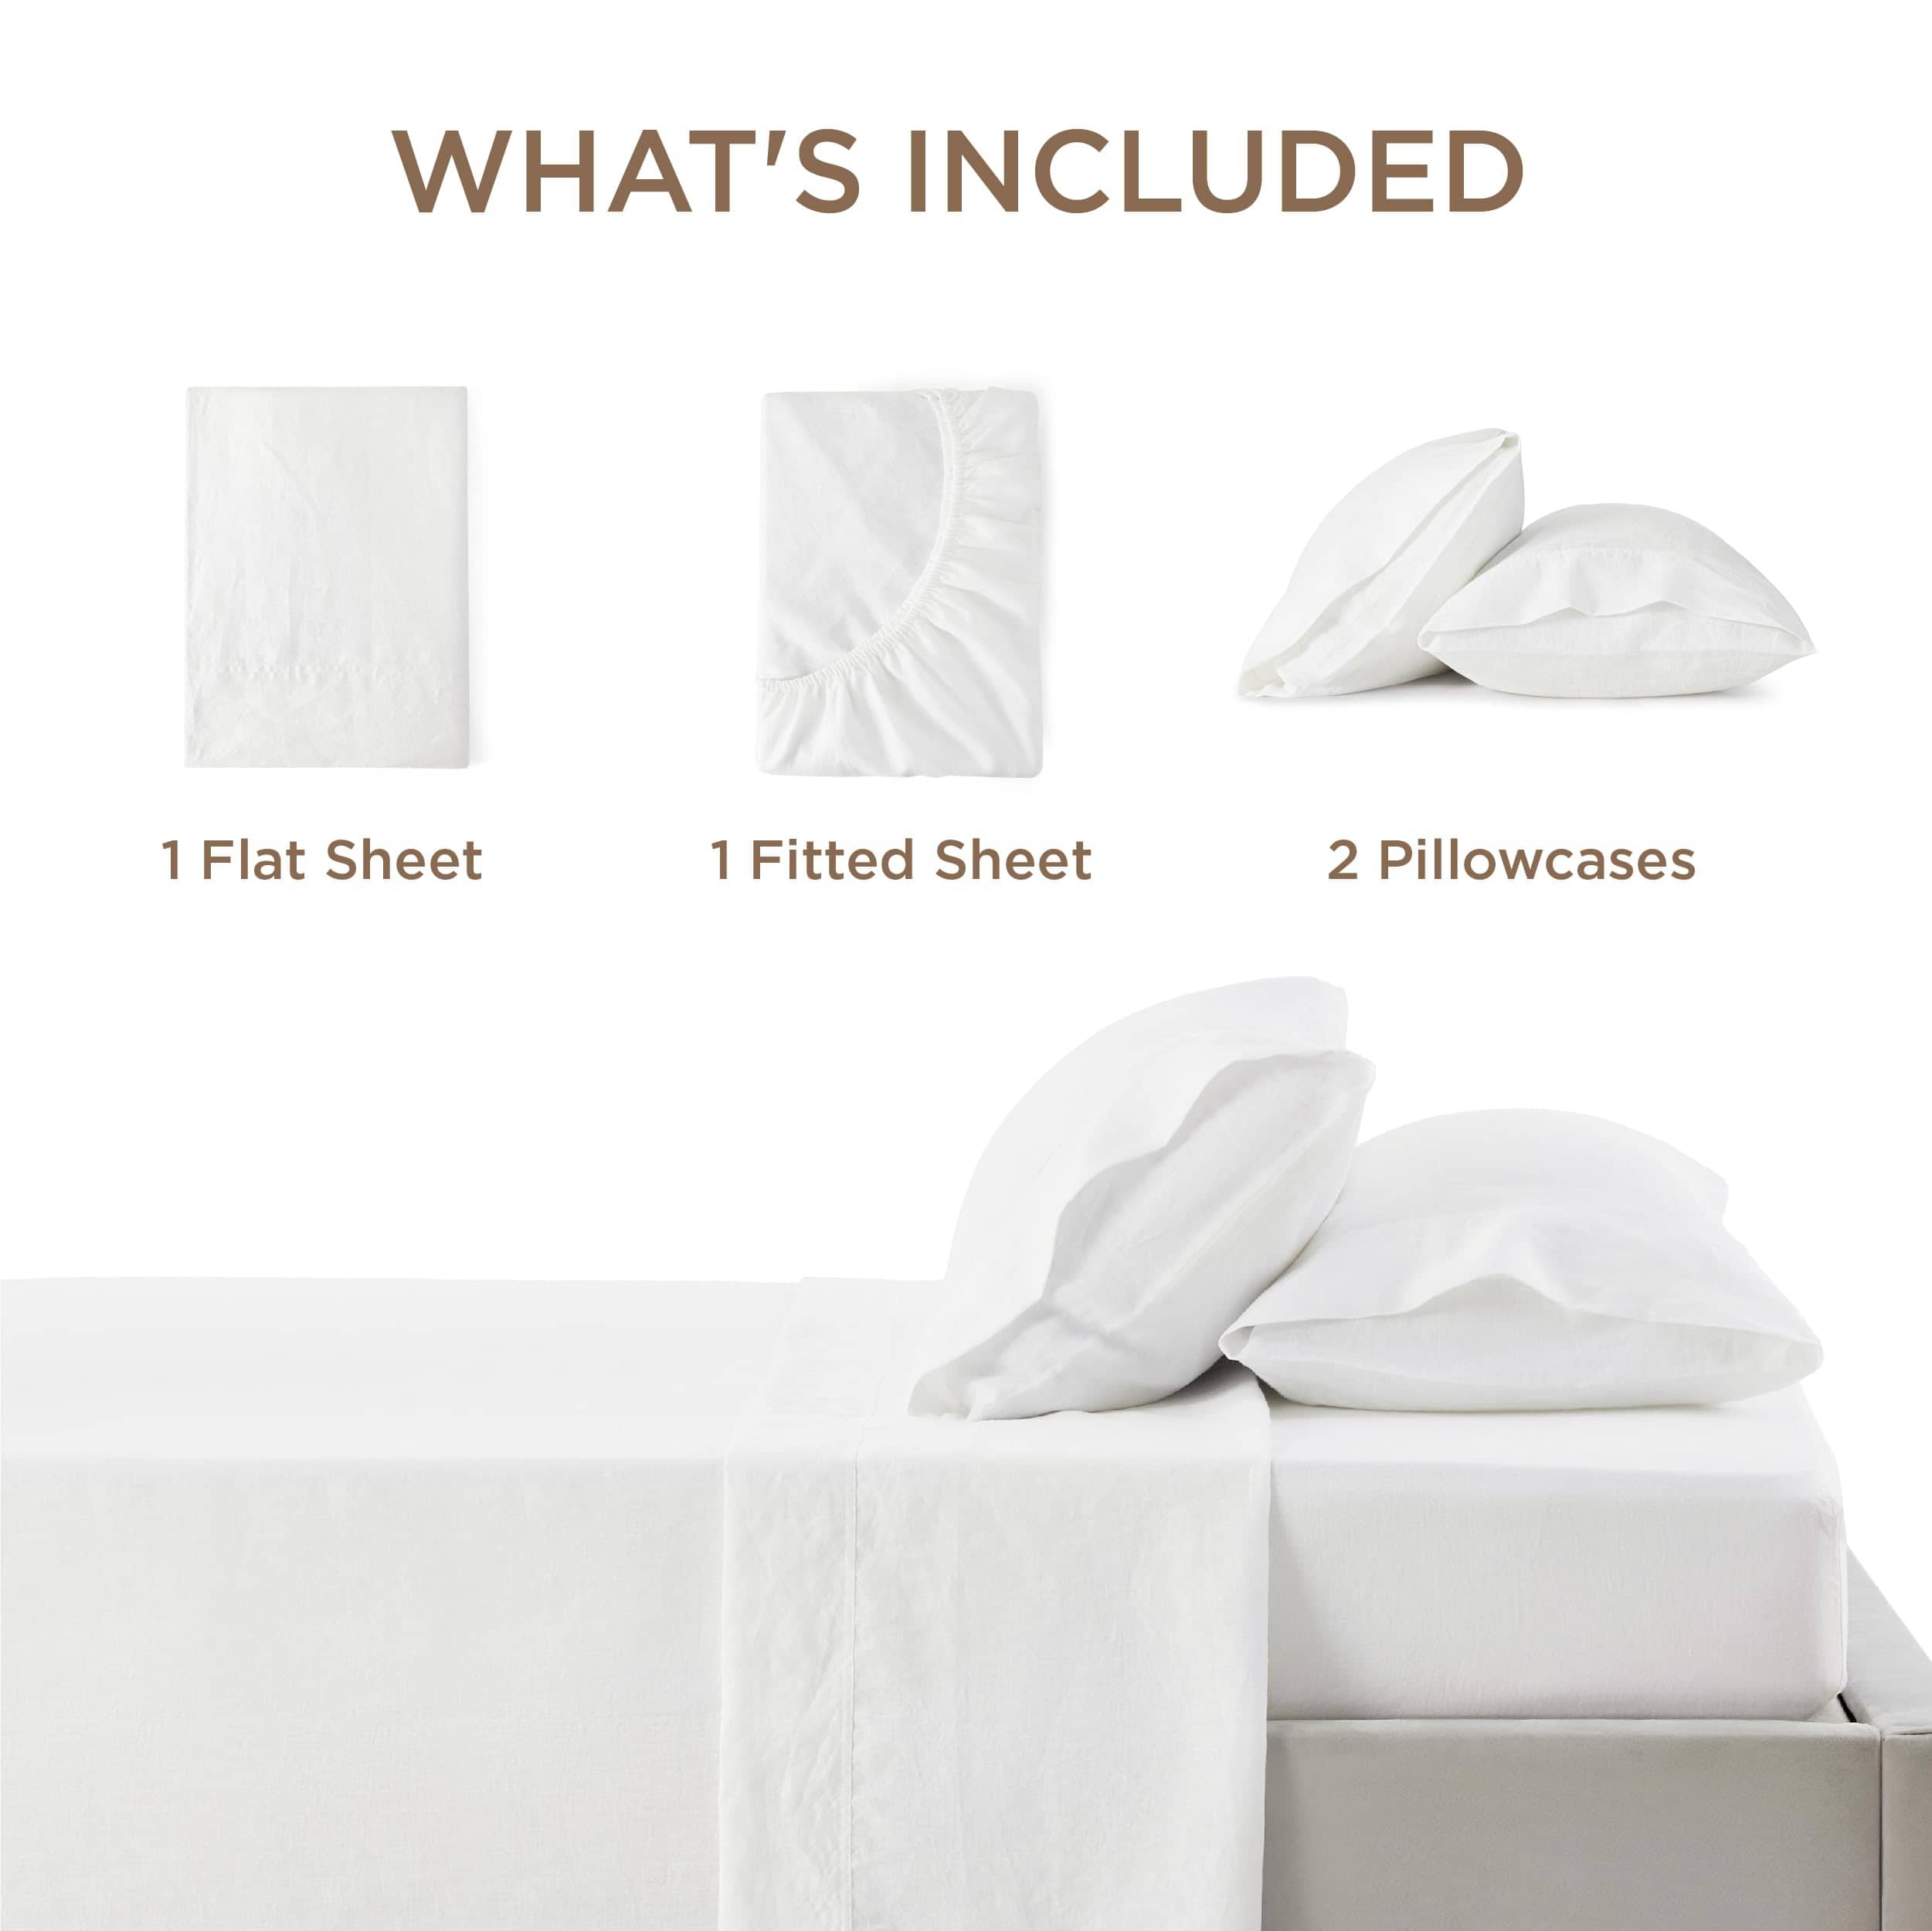 Bedsure Breathable Cotton Linen Bed Sheet Set